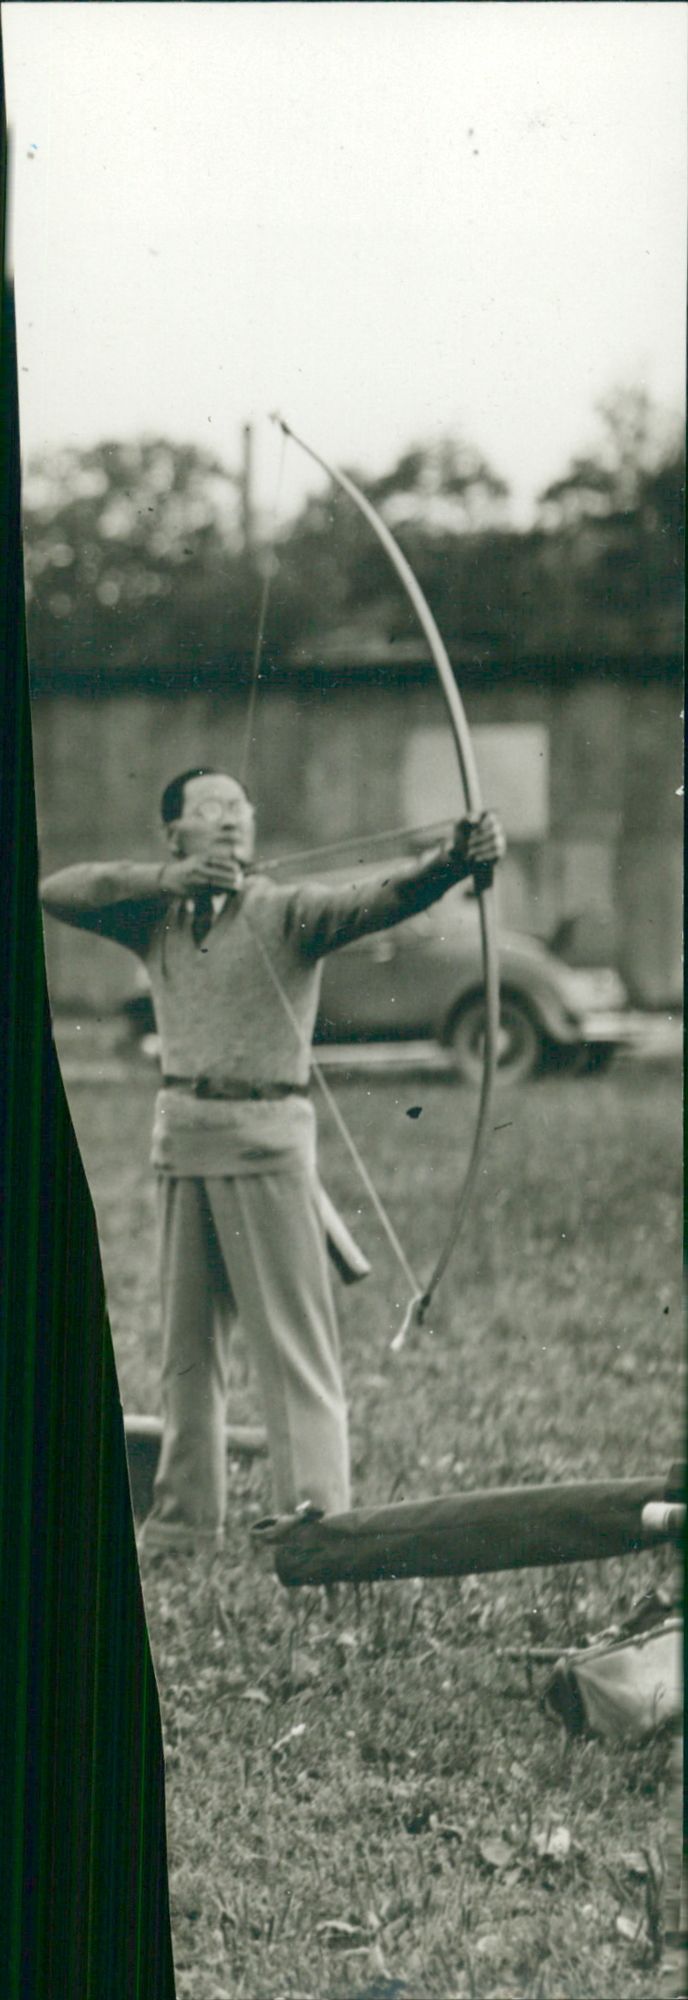 Archery - Vintage Photograph